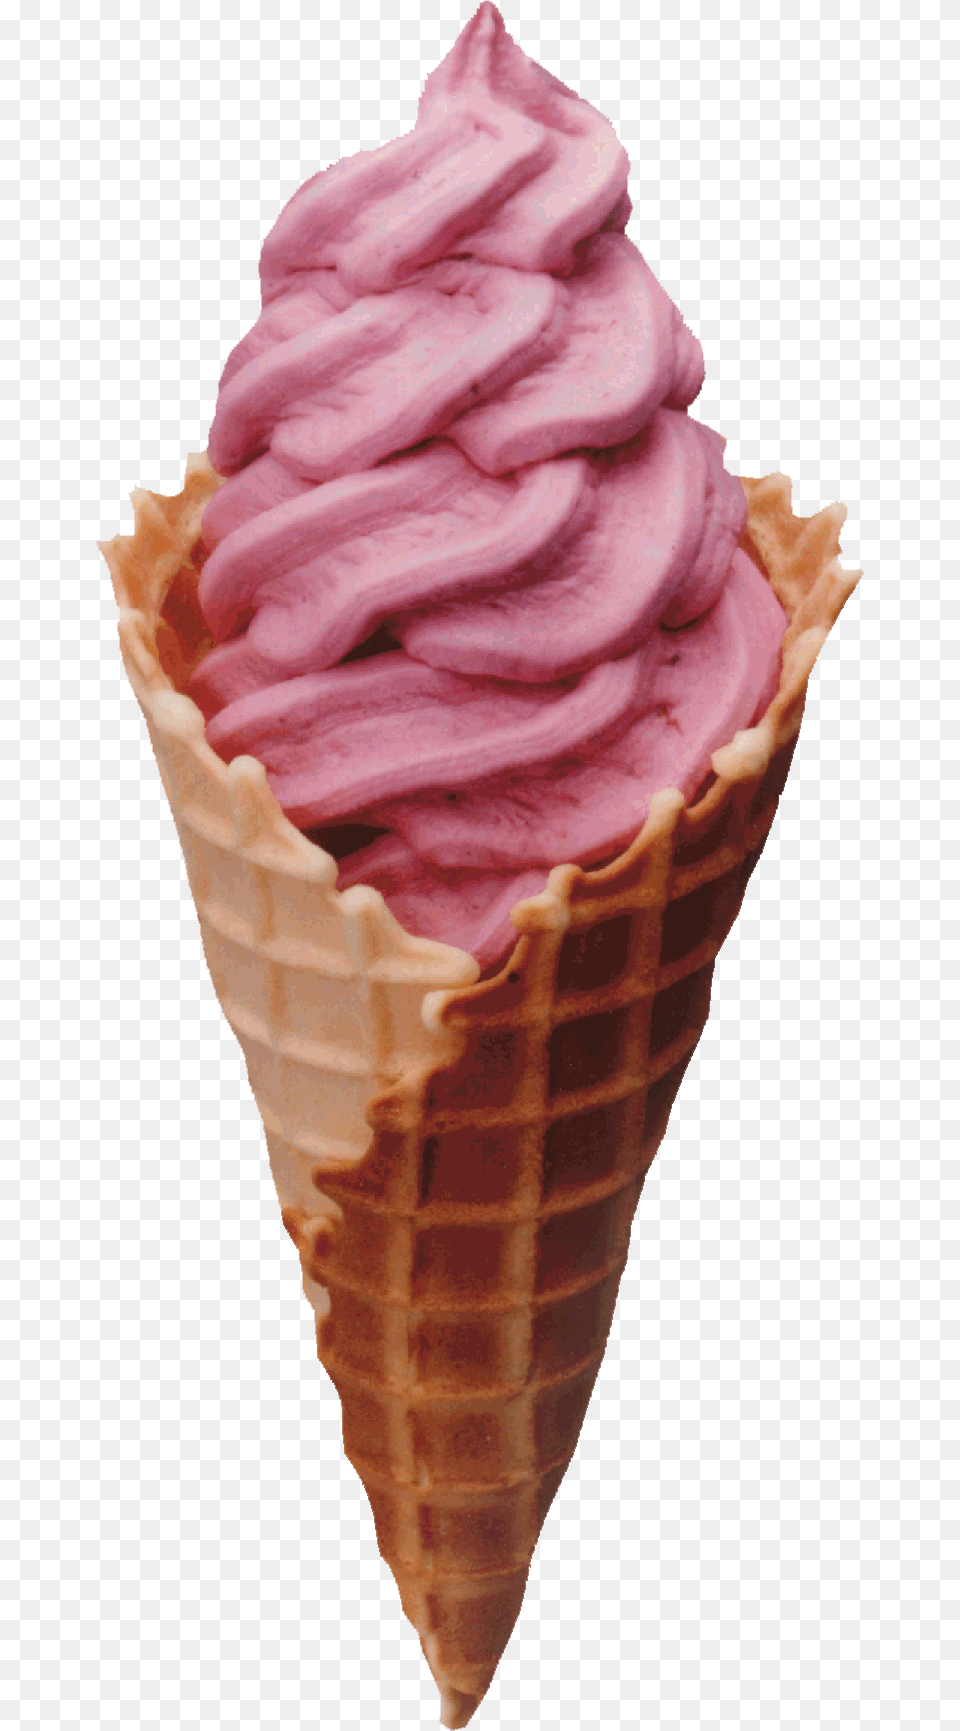 Ice Cream Hd Image Images Background Ice Cream, Dessert, Food, Ice Cream, Soft Serve Ice Cream Free Png